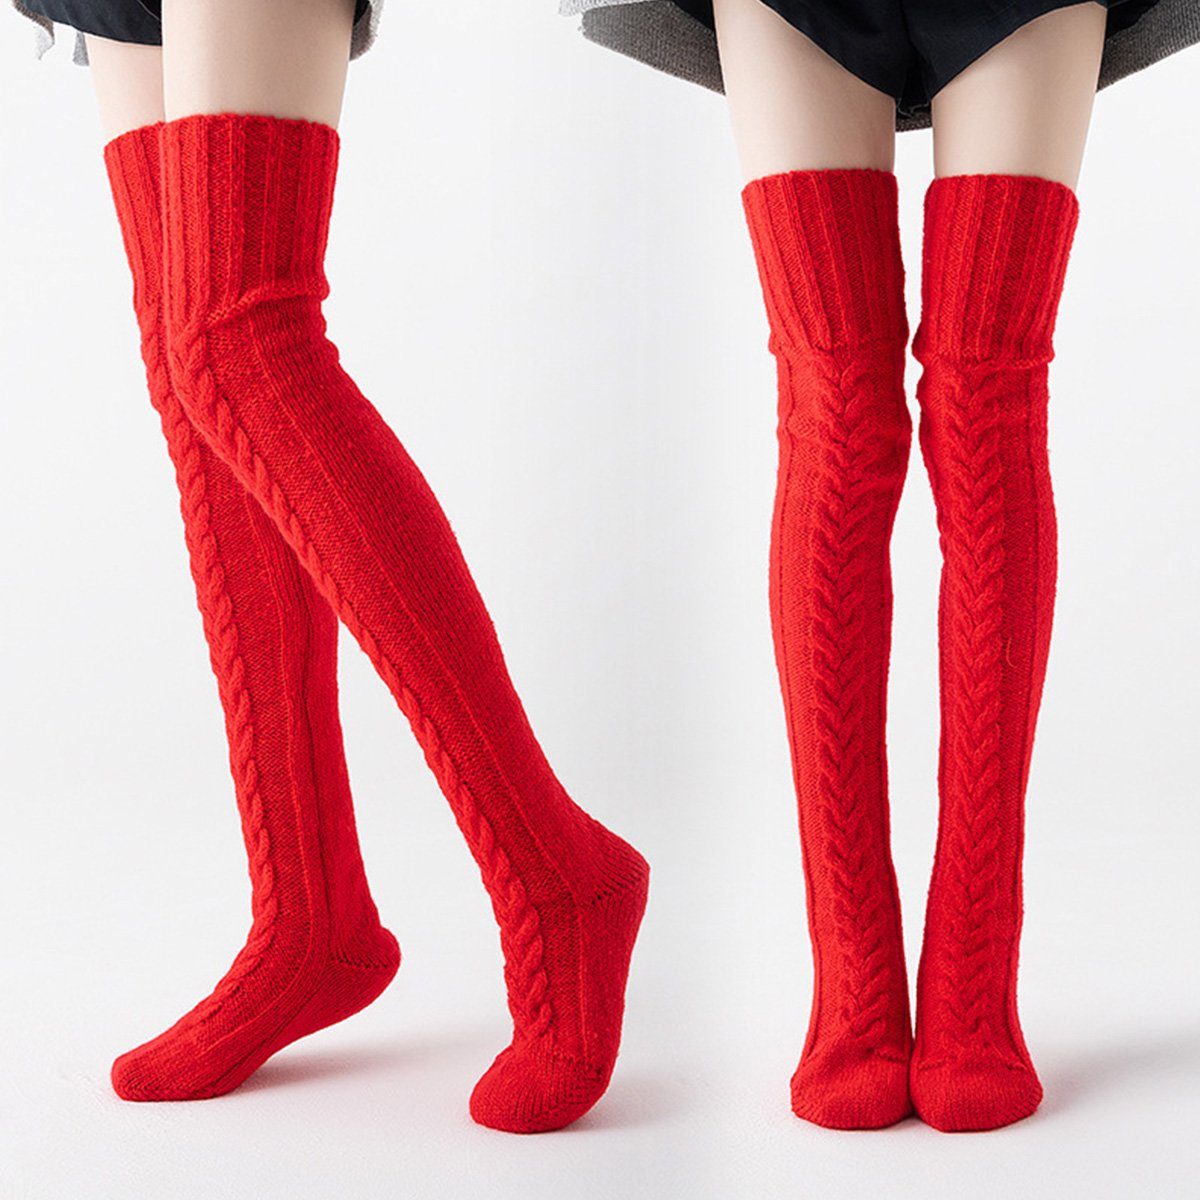 Damen, DOPWii Rot Strickstrümpfe 105/85cm dehnbare Winter-Overknee-Strümpfe, Socken